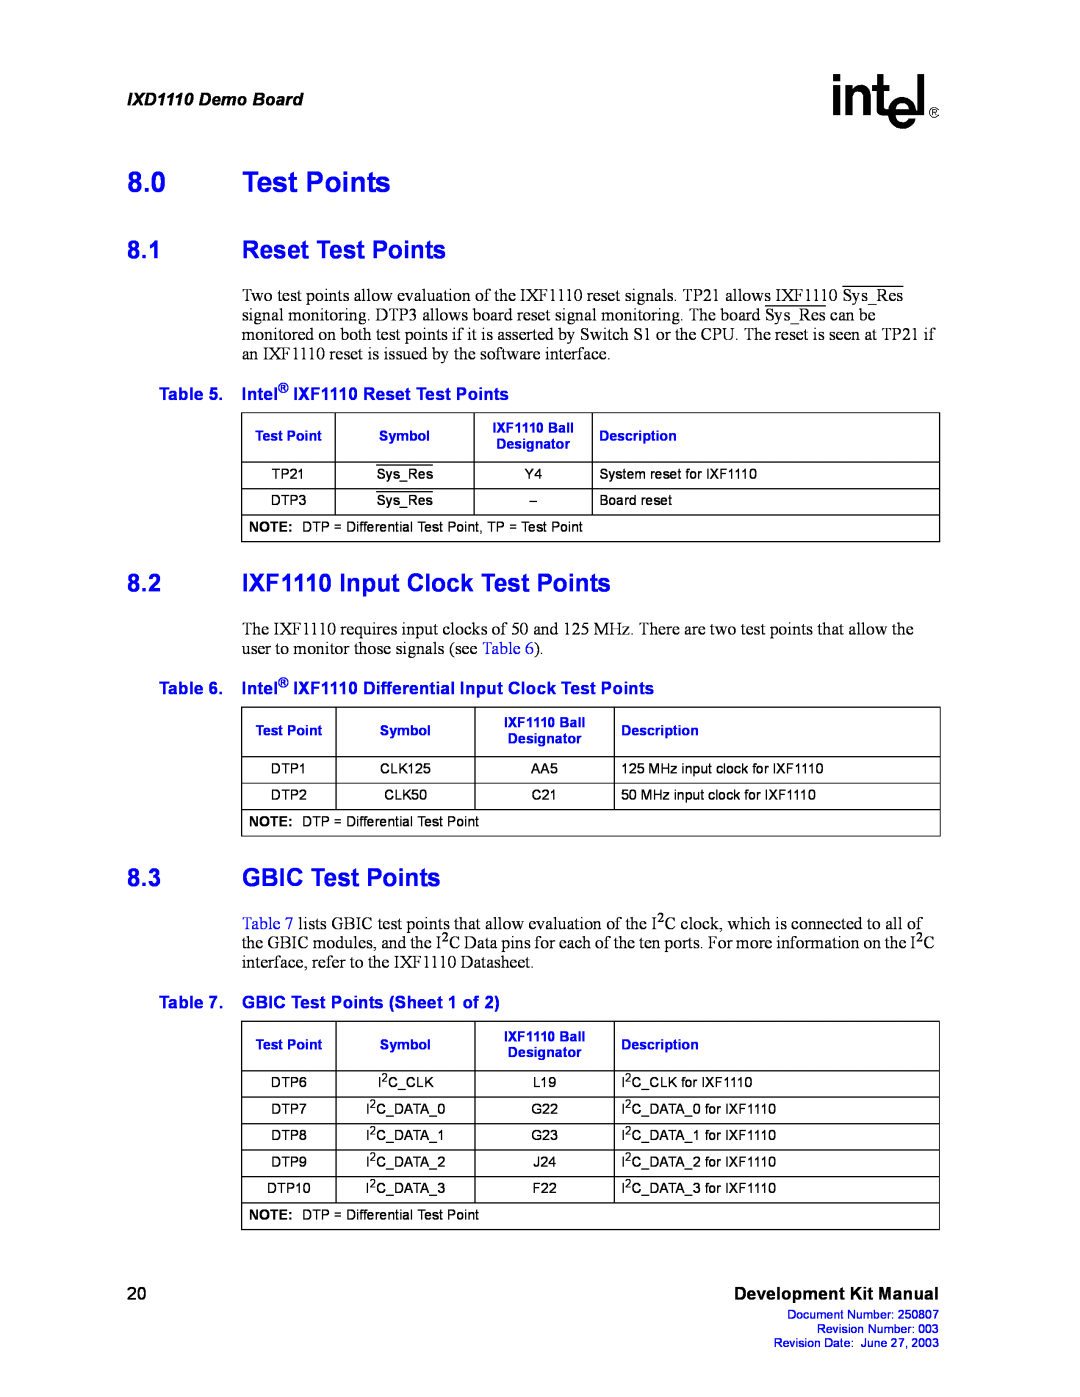 Intel IXD1110 manual Reset Test Points, 8.2 IXF1110 Input Clock Test Points, GBIC Test Points Sheet 1 of 